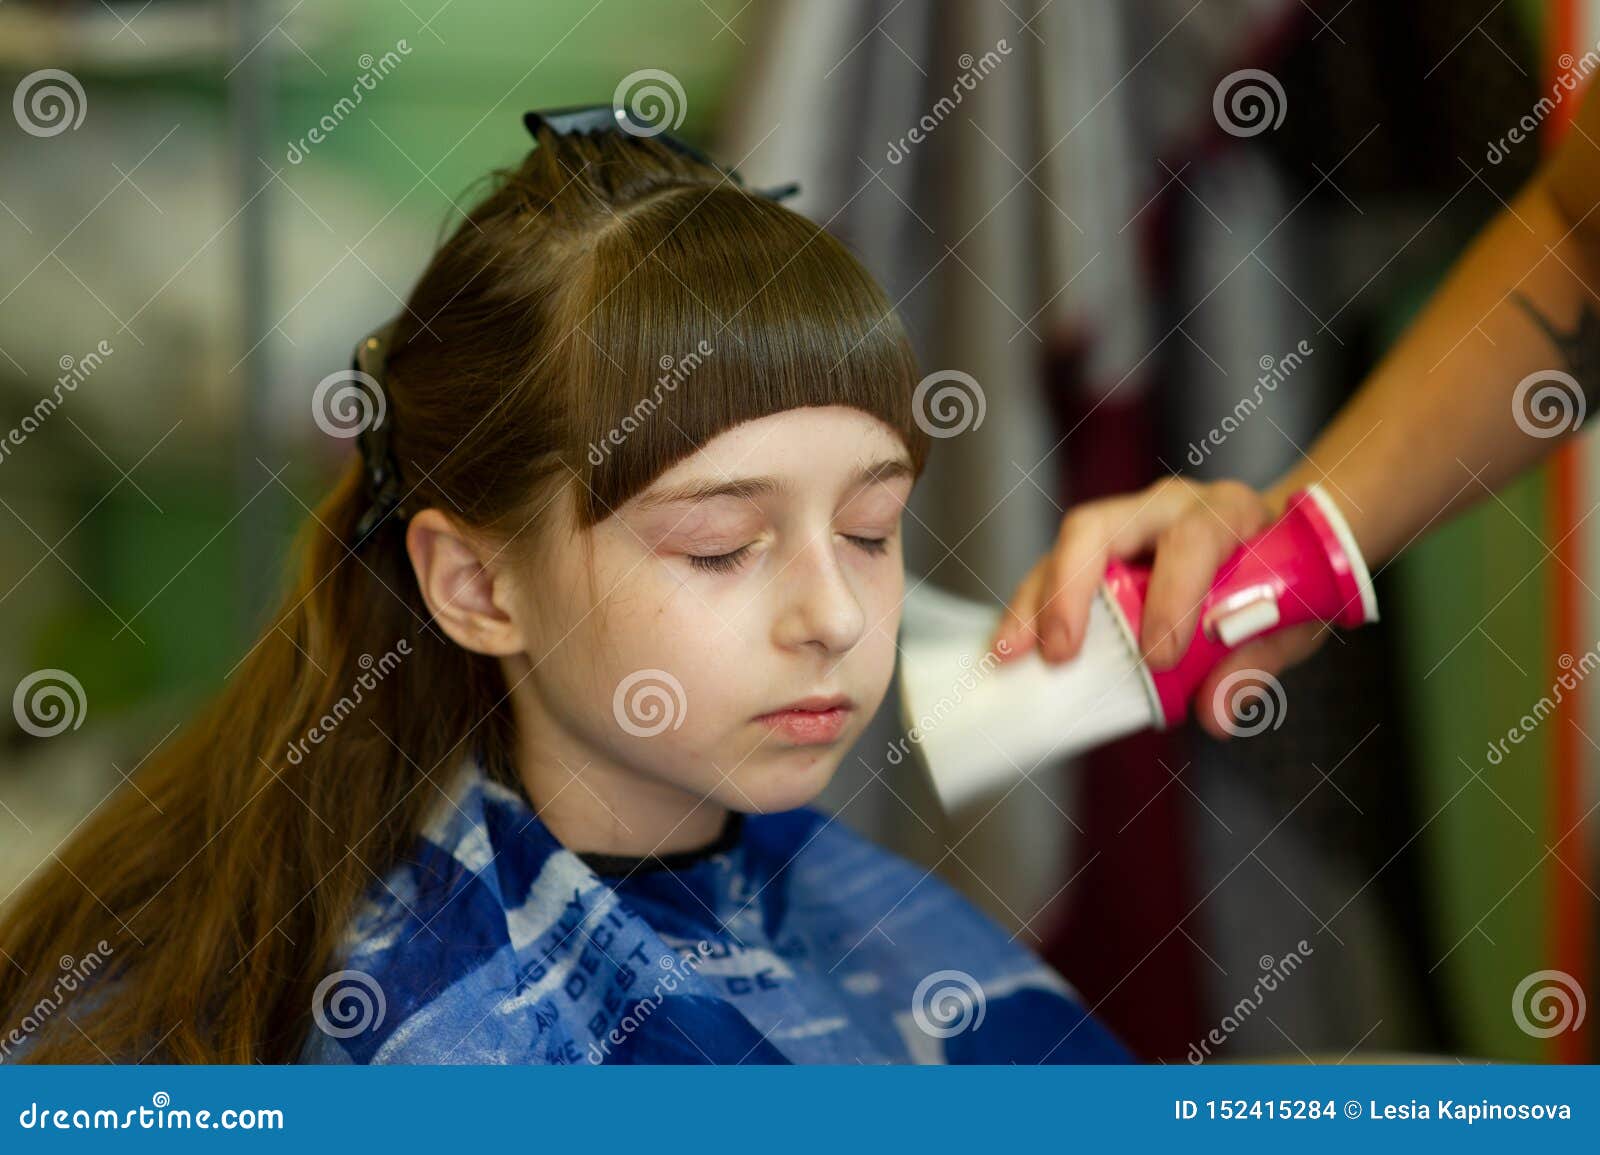 Premium Photo | Barber woman make fashionable hairstyle for cute little  blond girl child in modern barbershop hair salon hairdresser makes hairdo  braids pigtail